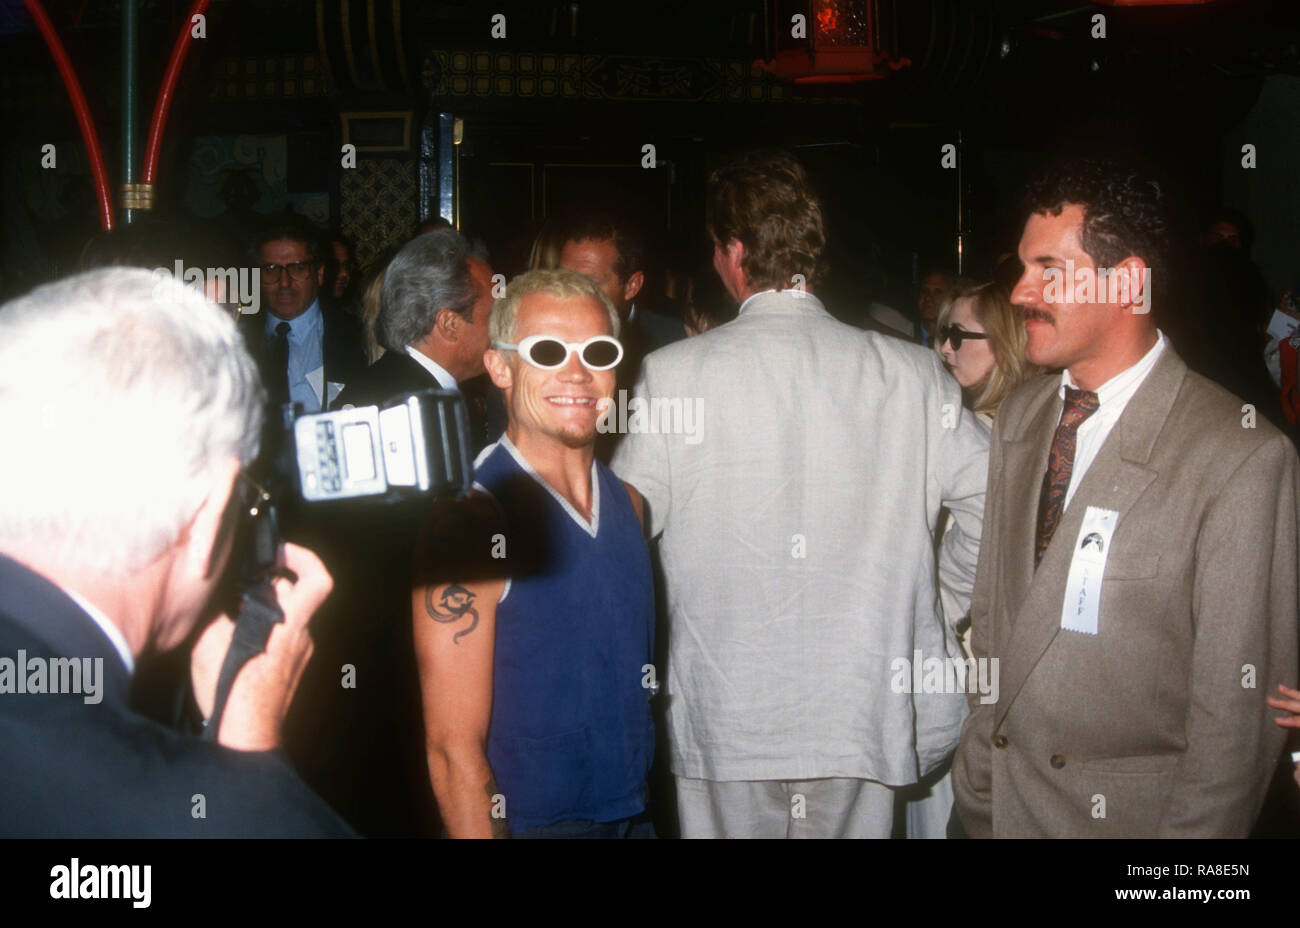 HOLLYWOOD, CA - 19. Juli: Musiker Flea von den Red Hot Chili Peppers sorgt sich Paramount Pictures "coneheads" Premiere am 19. Juli 1993 bei Mann Chinese Theatre in Hollywood, Kalifornien. Foto von Barry King/Alamy Stock Foto Stockfoto